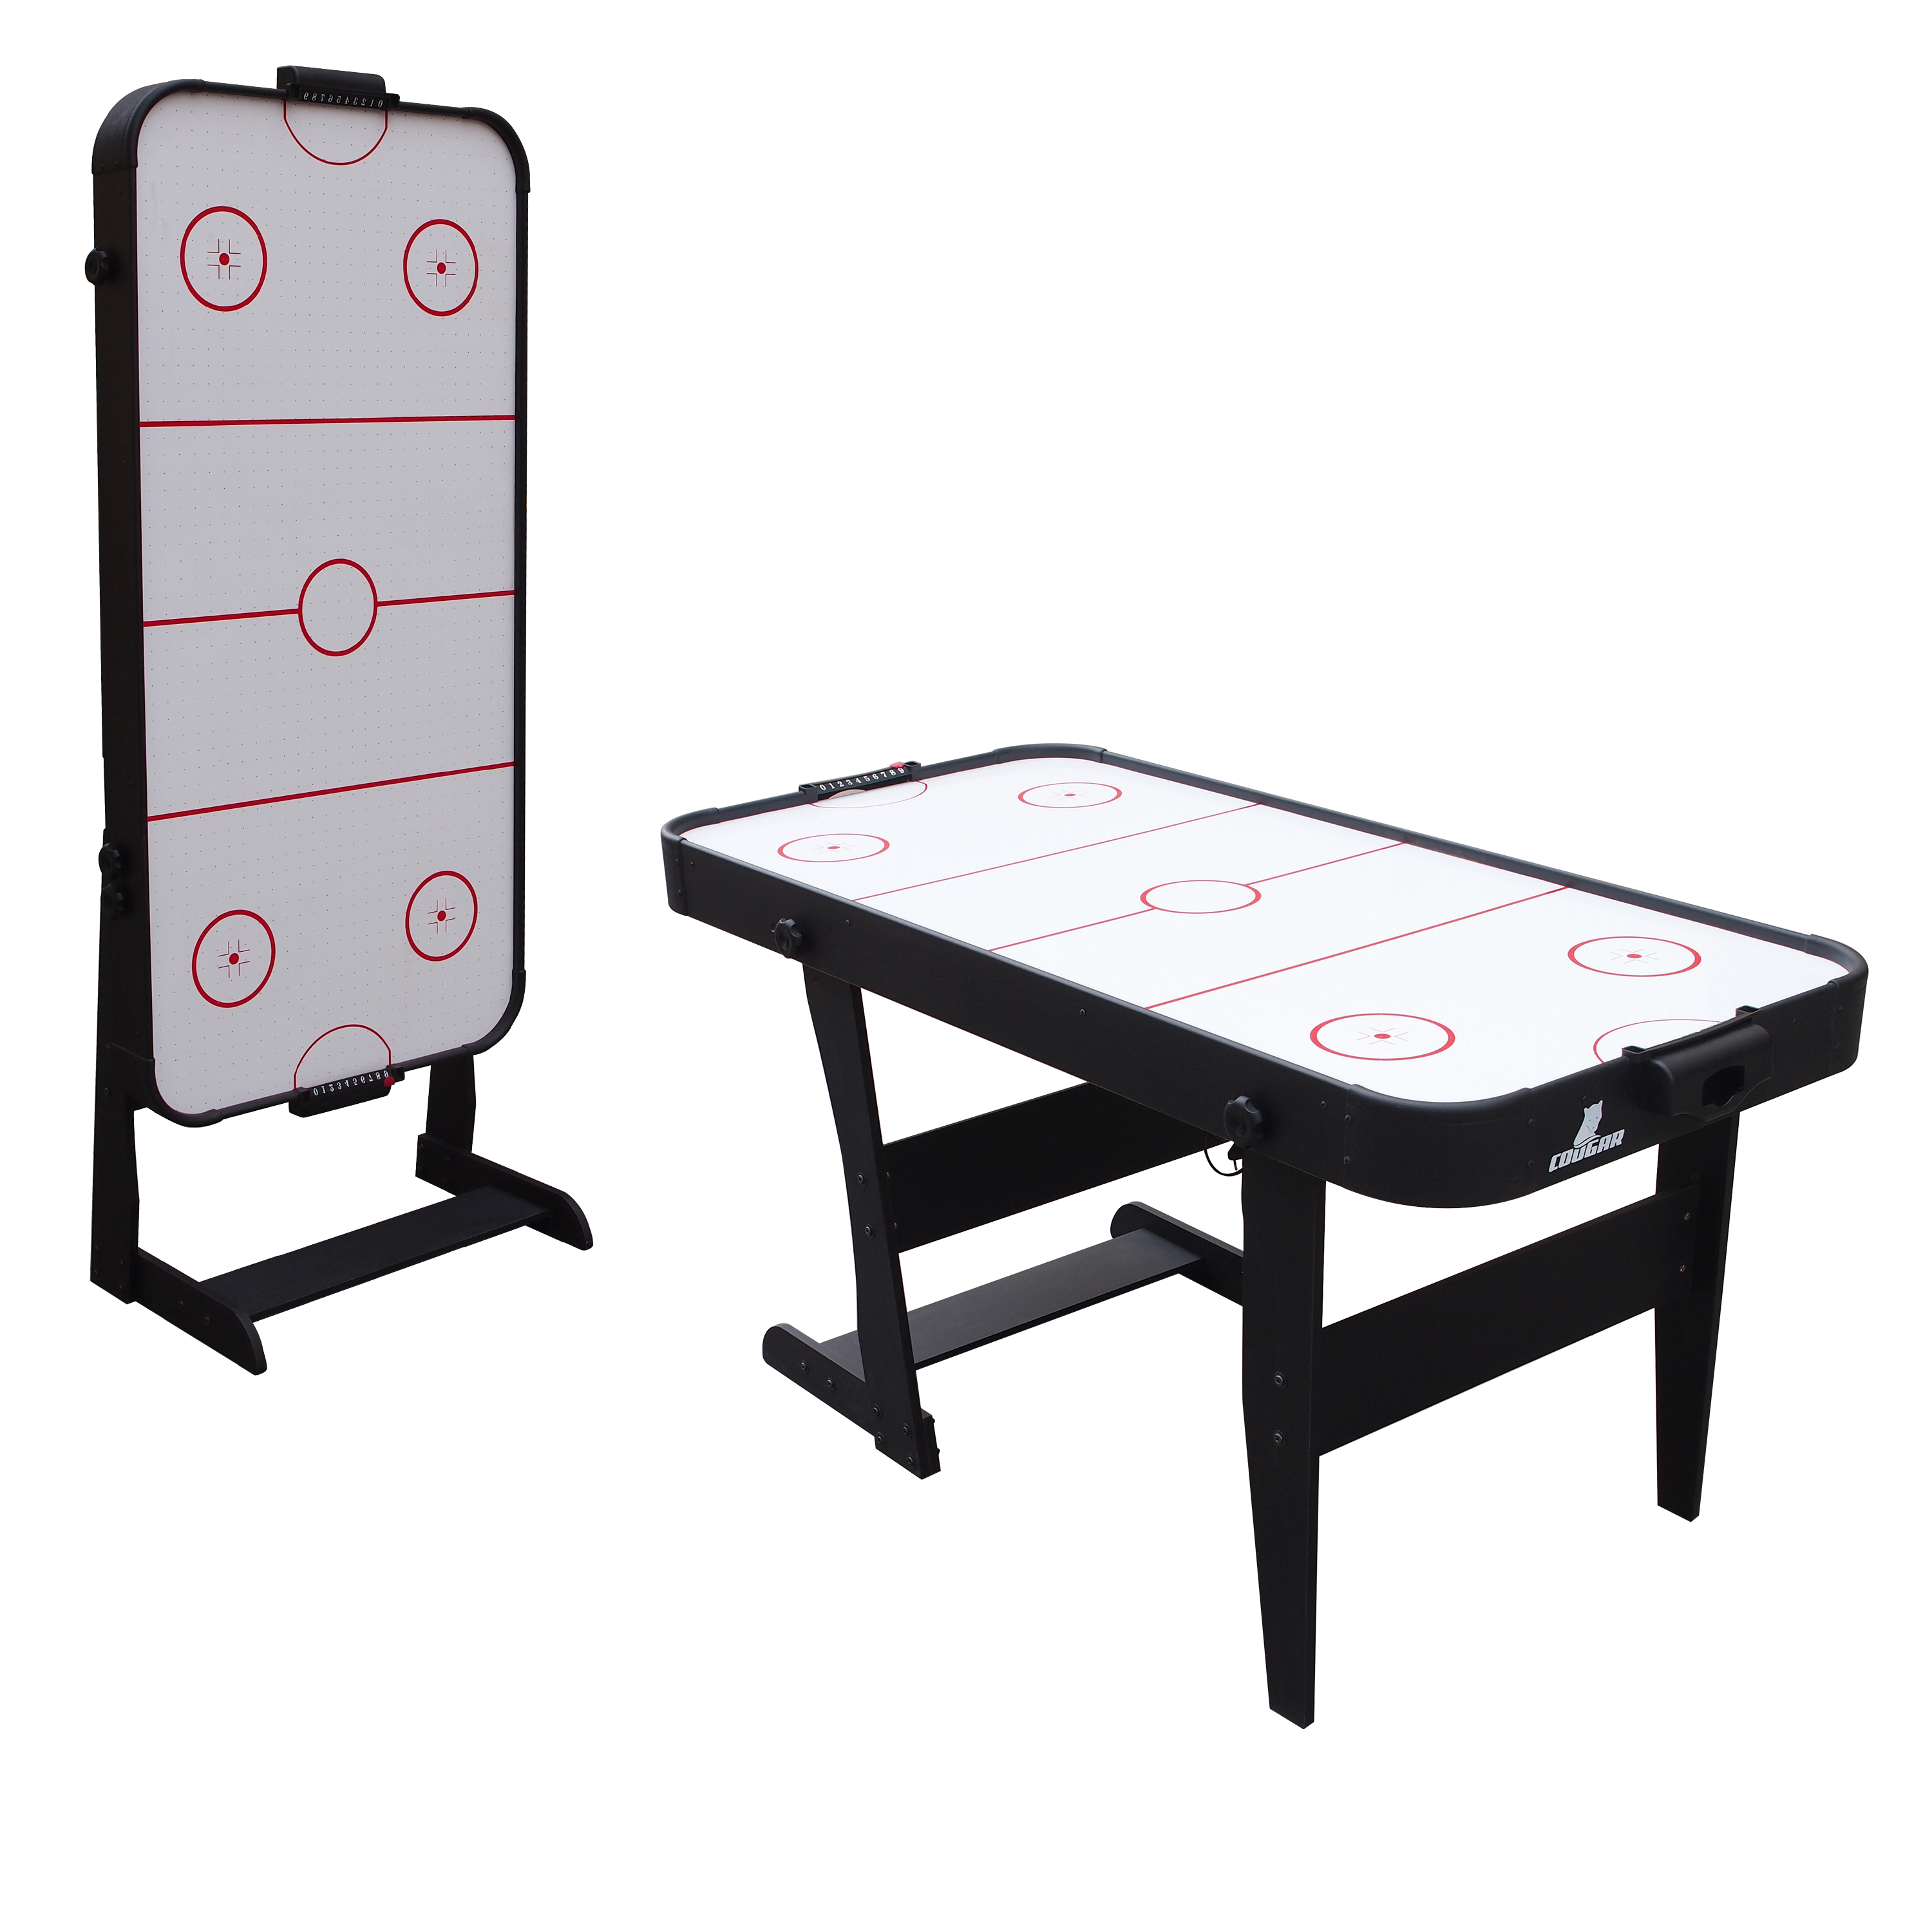 Icing folding Airhockey Table